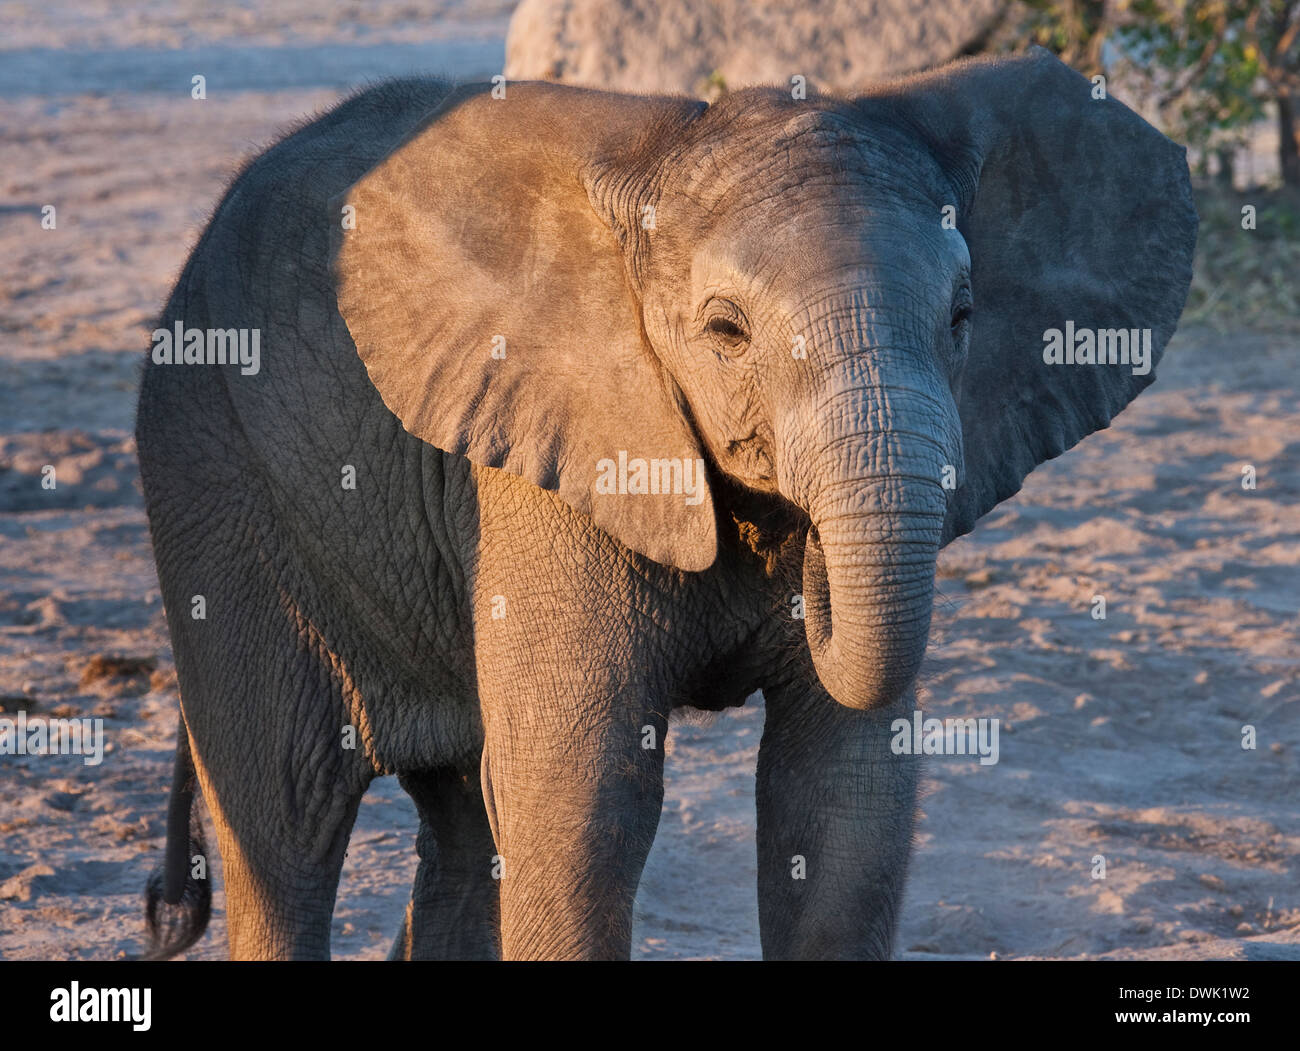 A baby elephant (Loxodonta africana) in the Savuti region of northern Botswana. Stock Photo